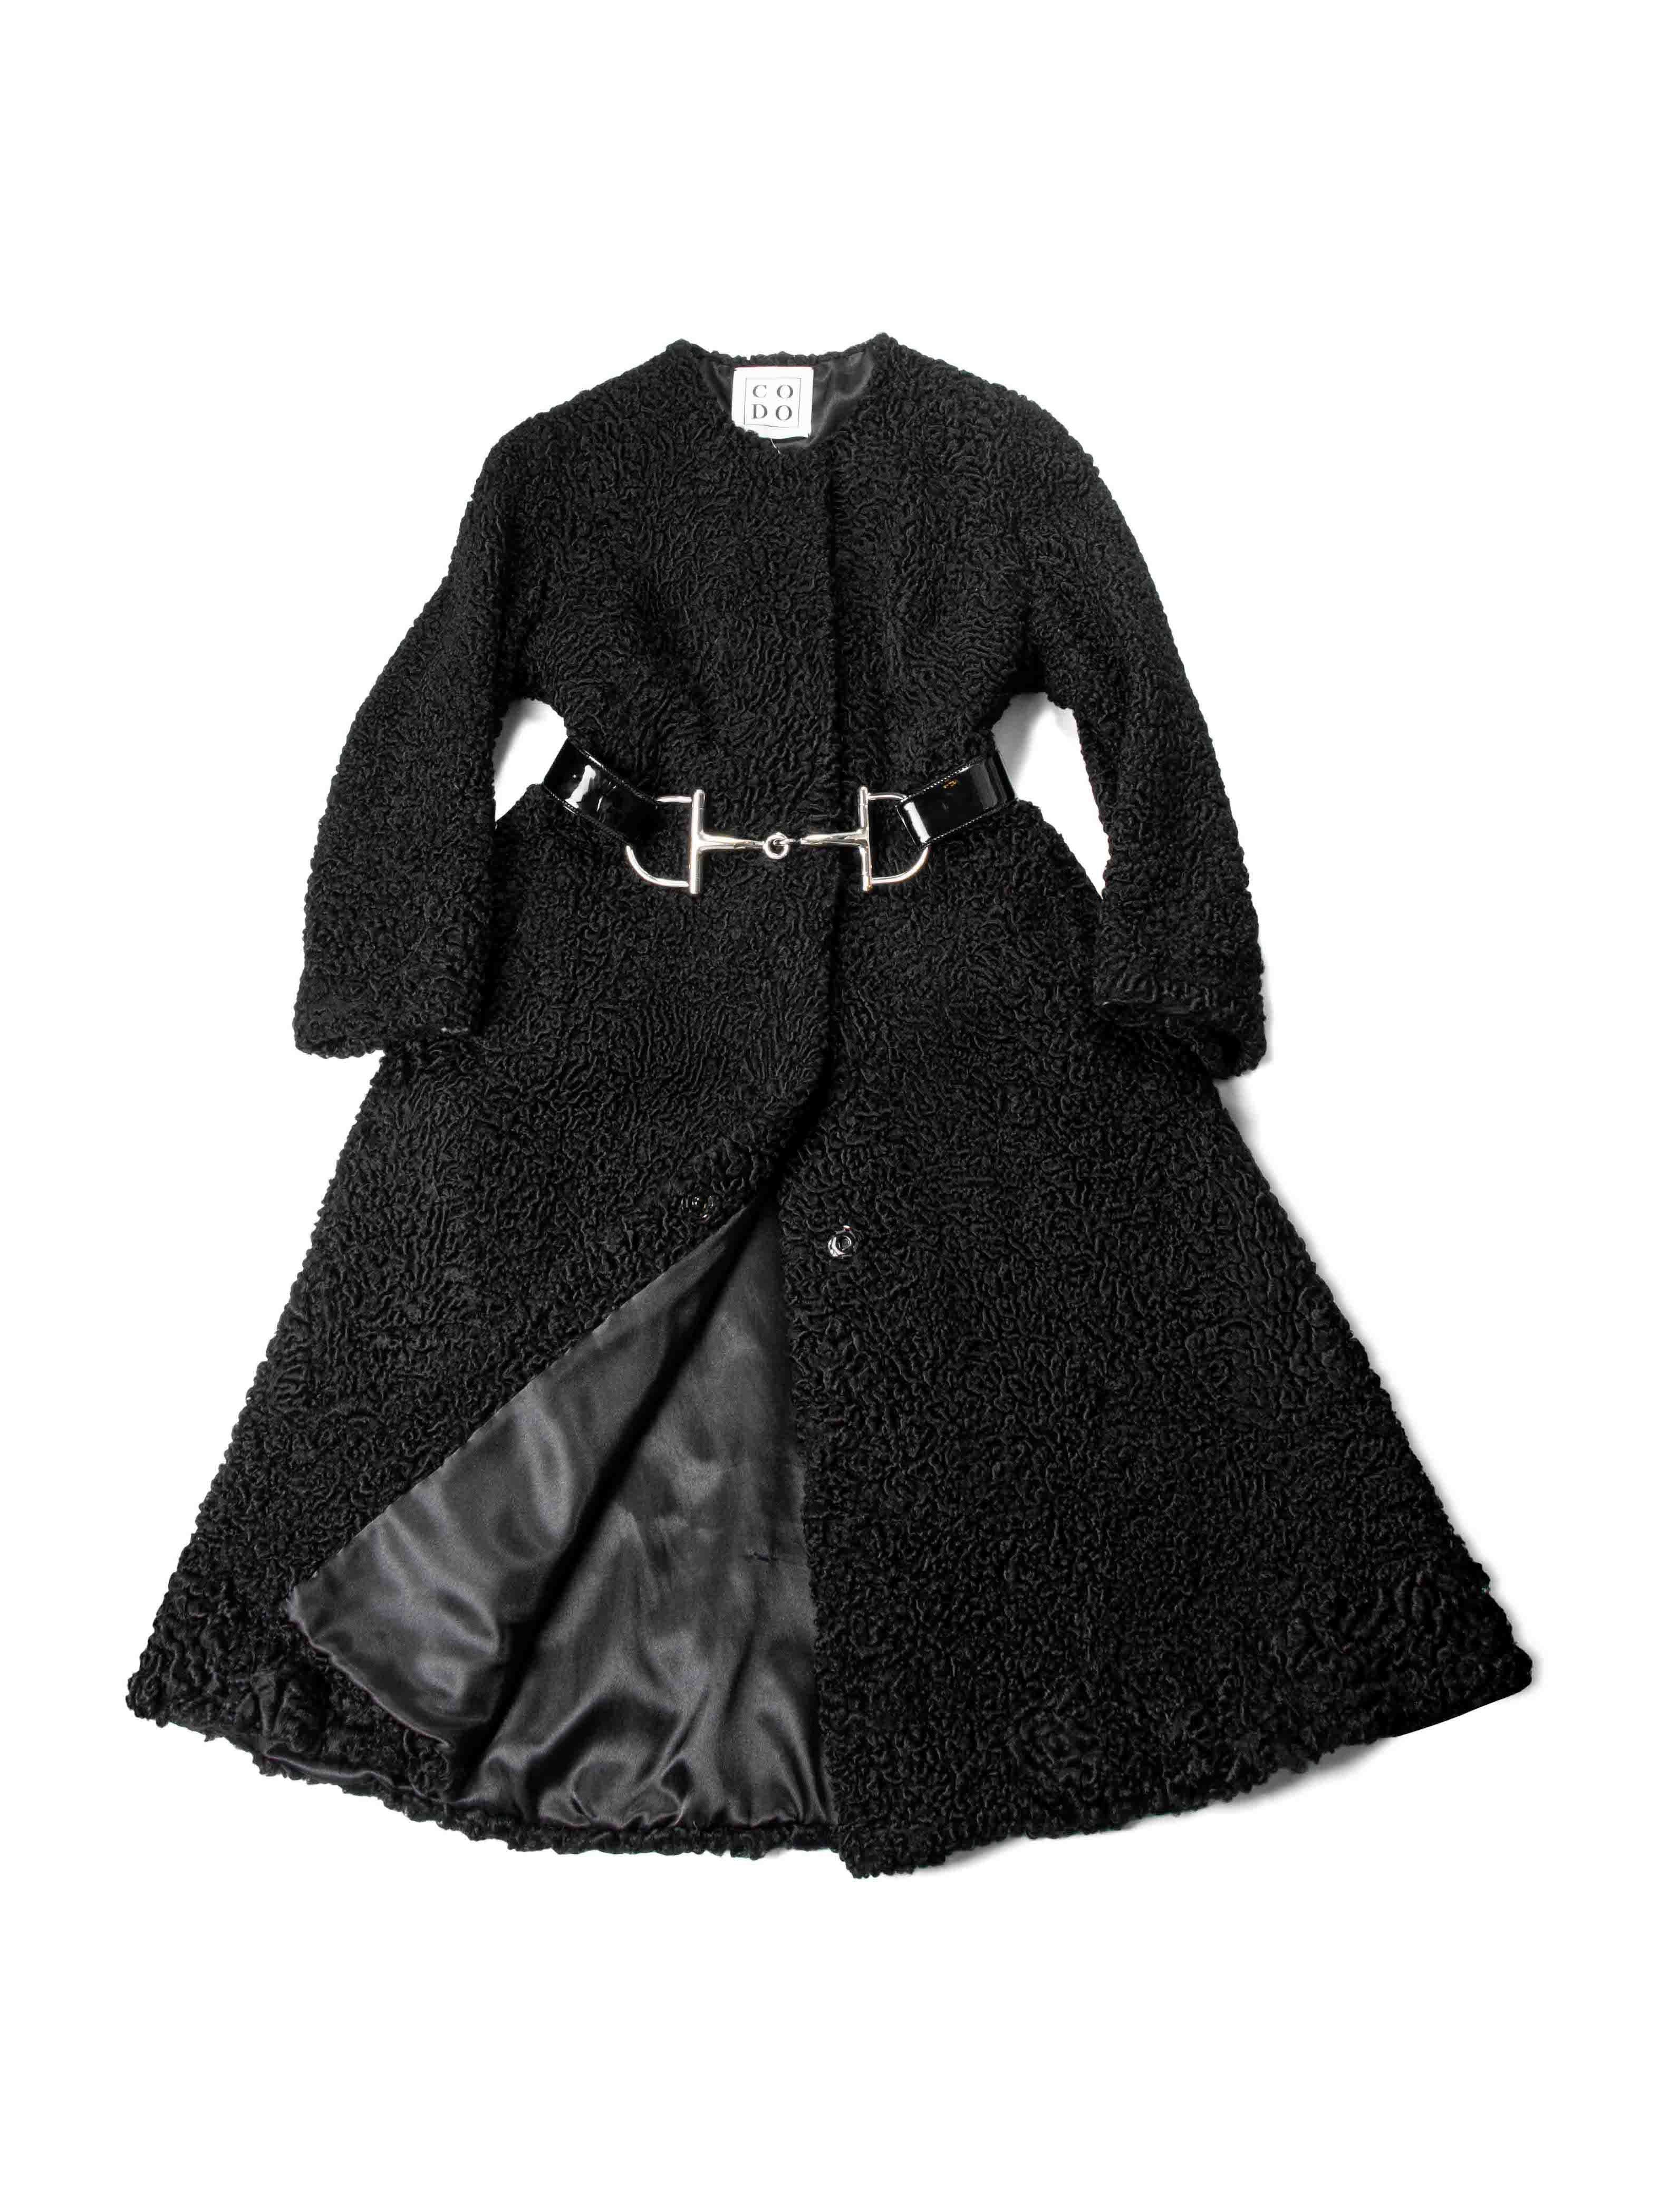 CODO Curly Lamb A Line Long Coat Black-designer resale